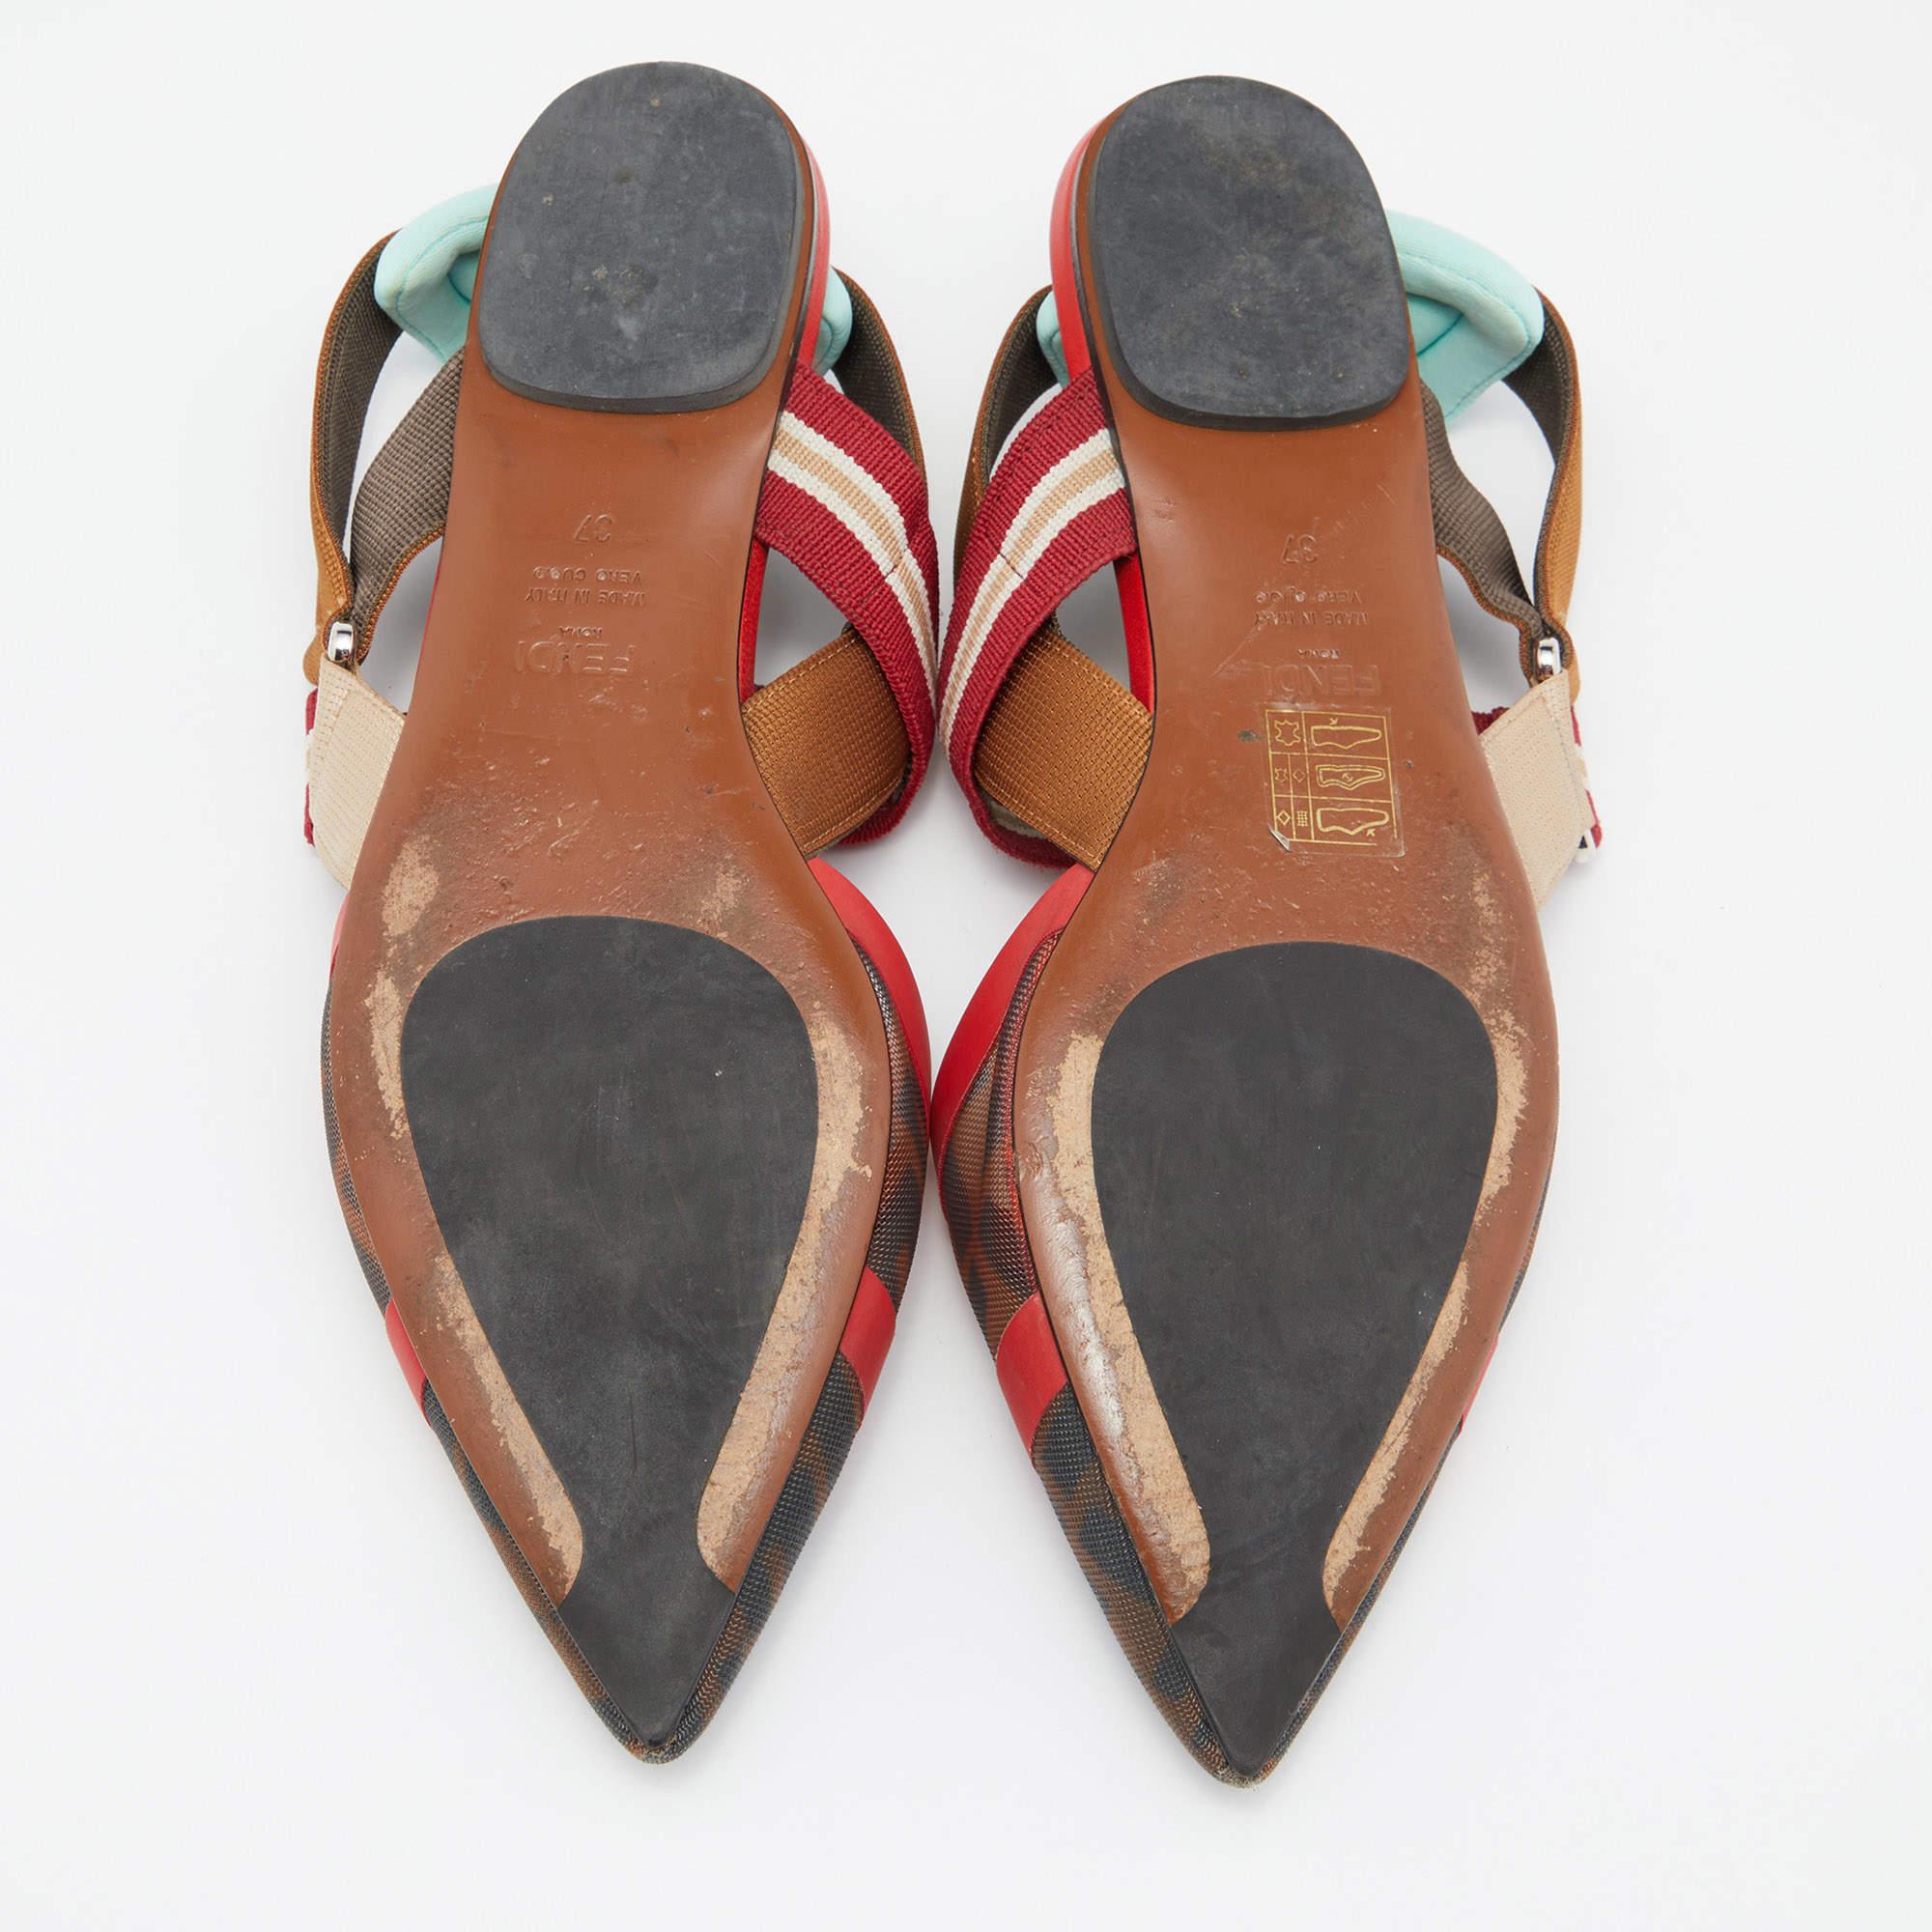 Fendi Multicolor Leather and Mesh Colibri Slingback Sandals Size 37 5